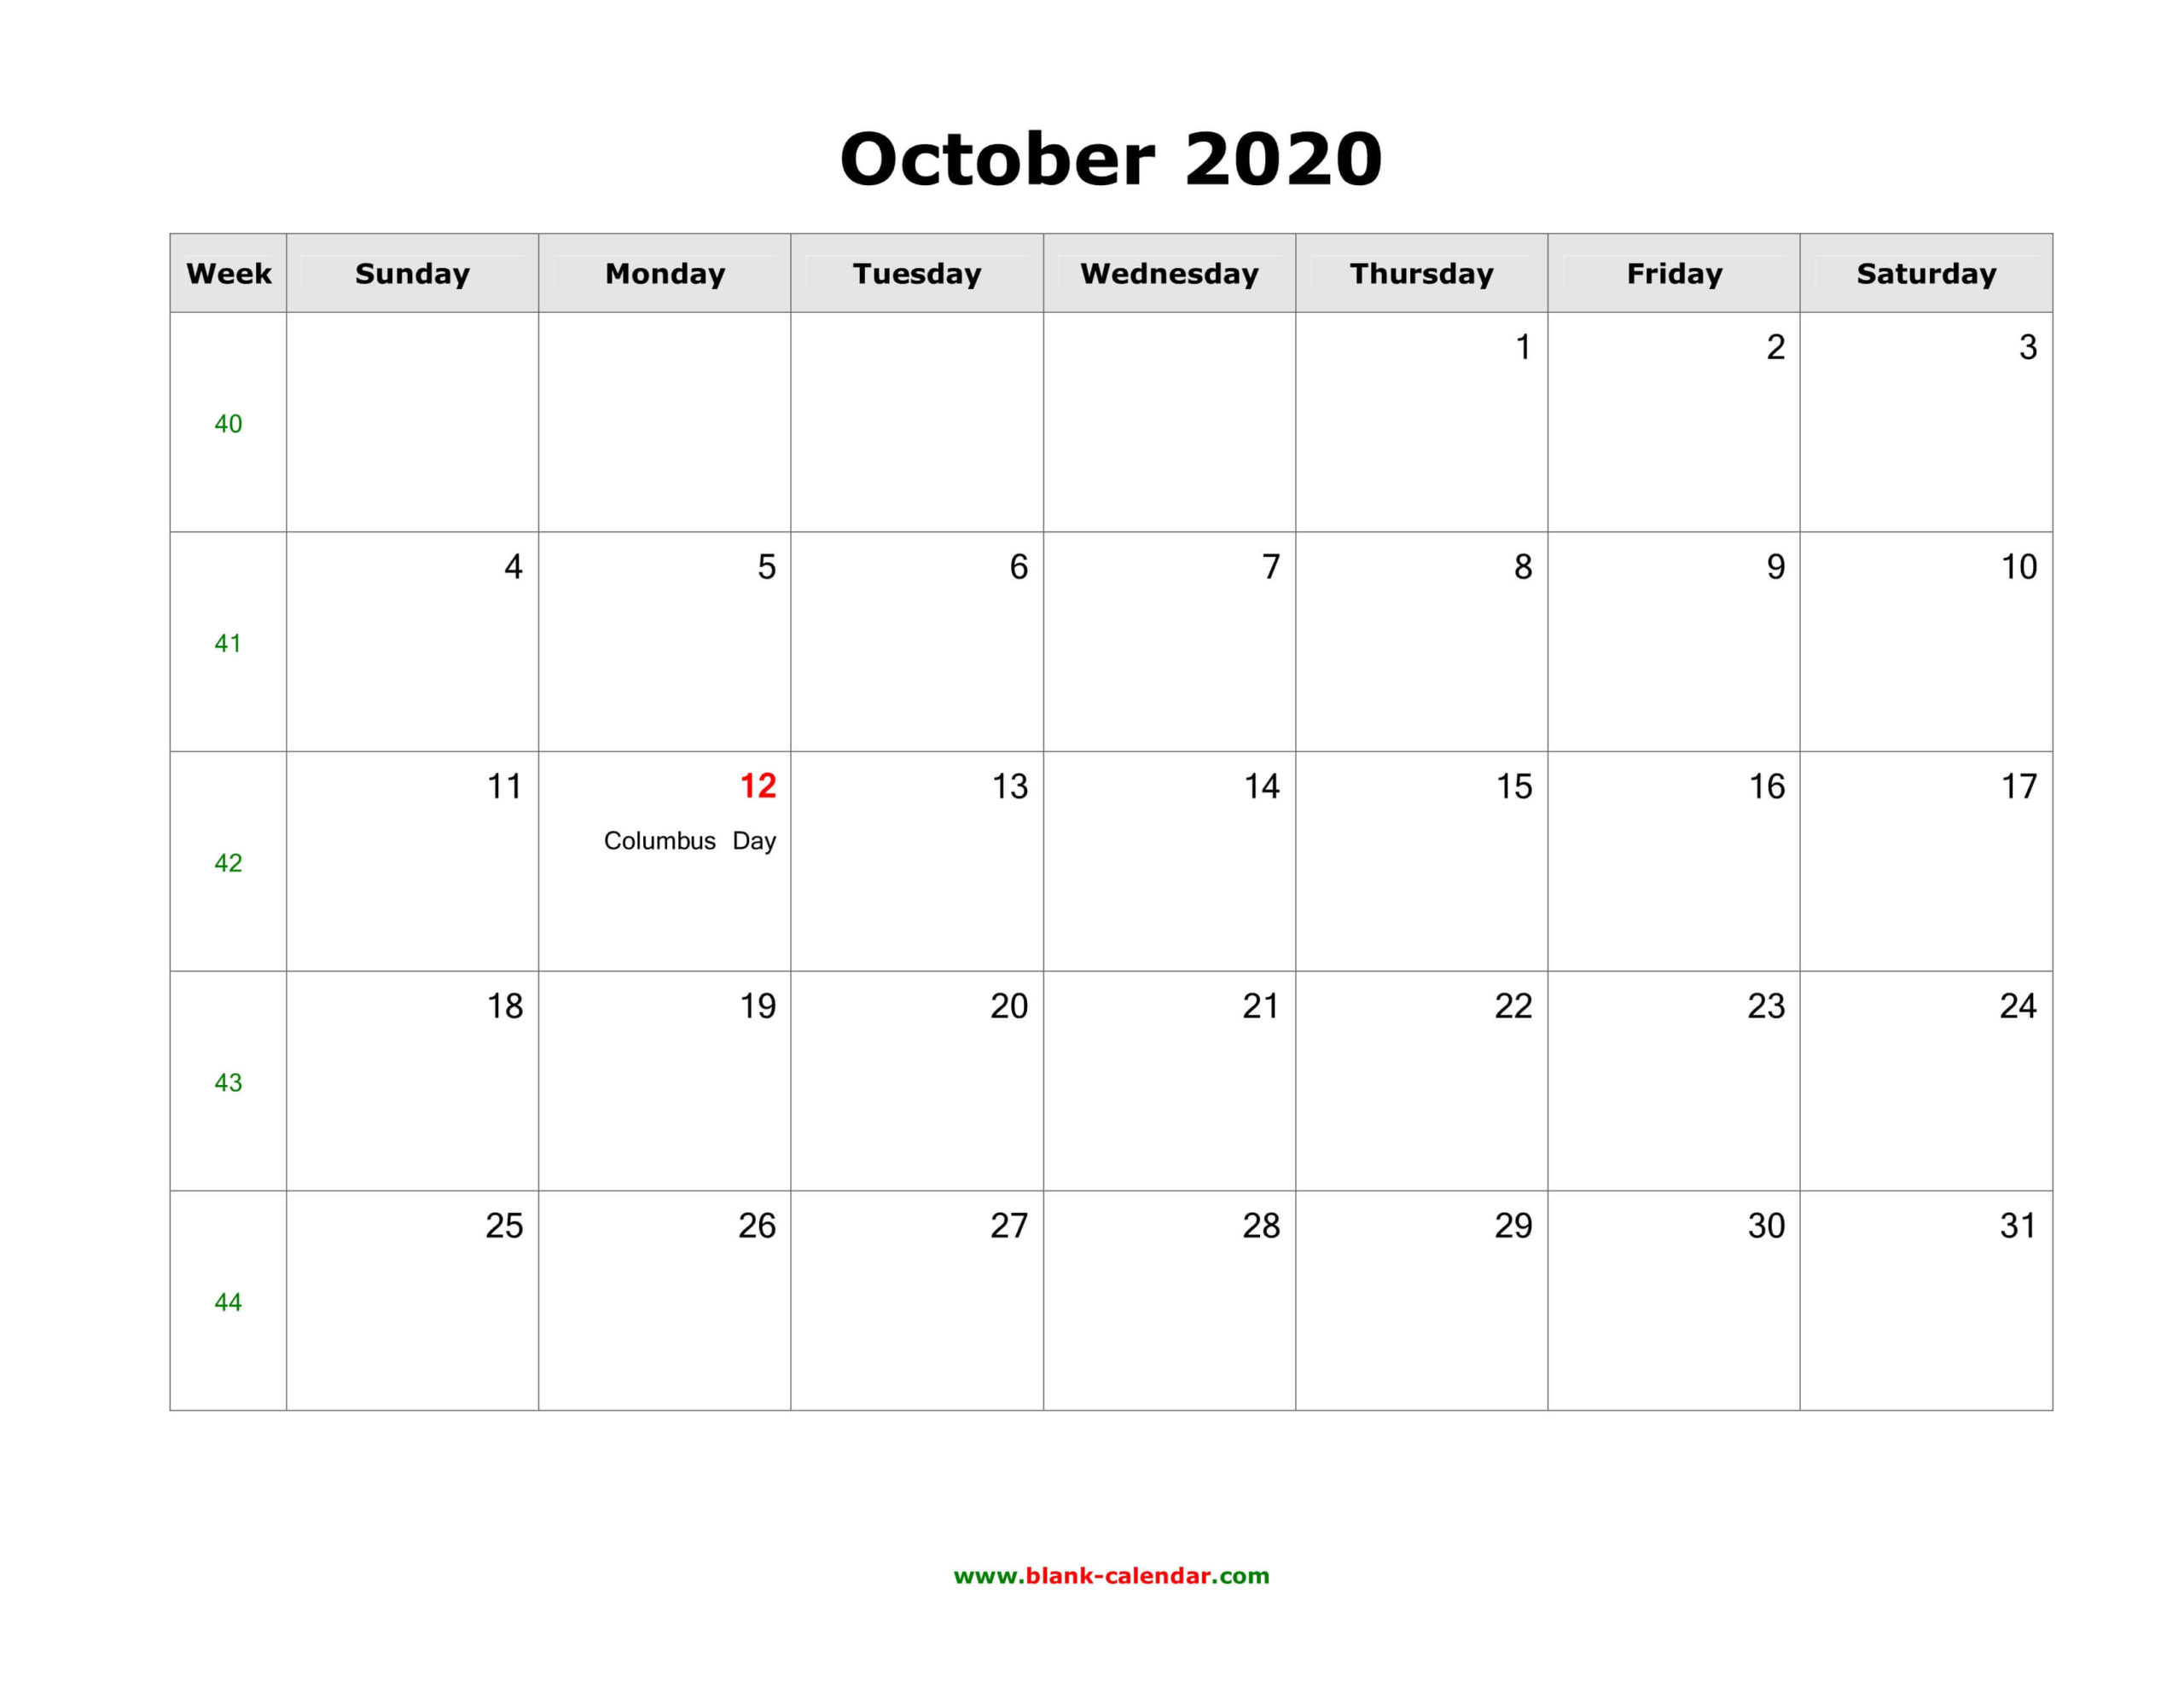 October 2020 US Calendar Holidays